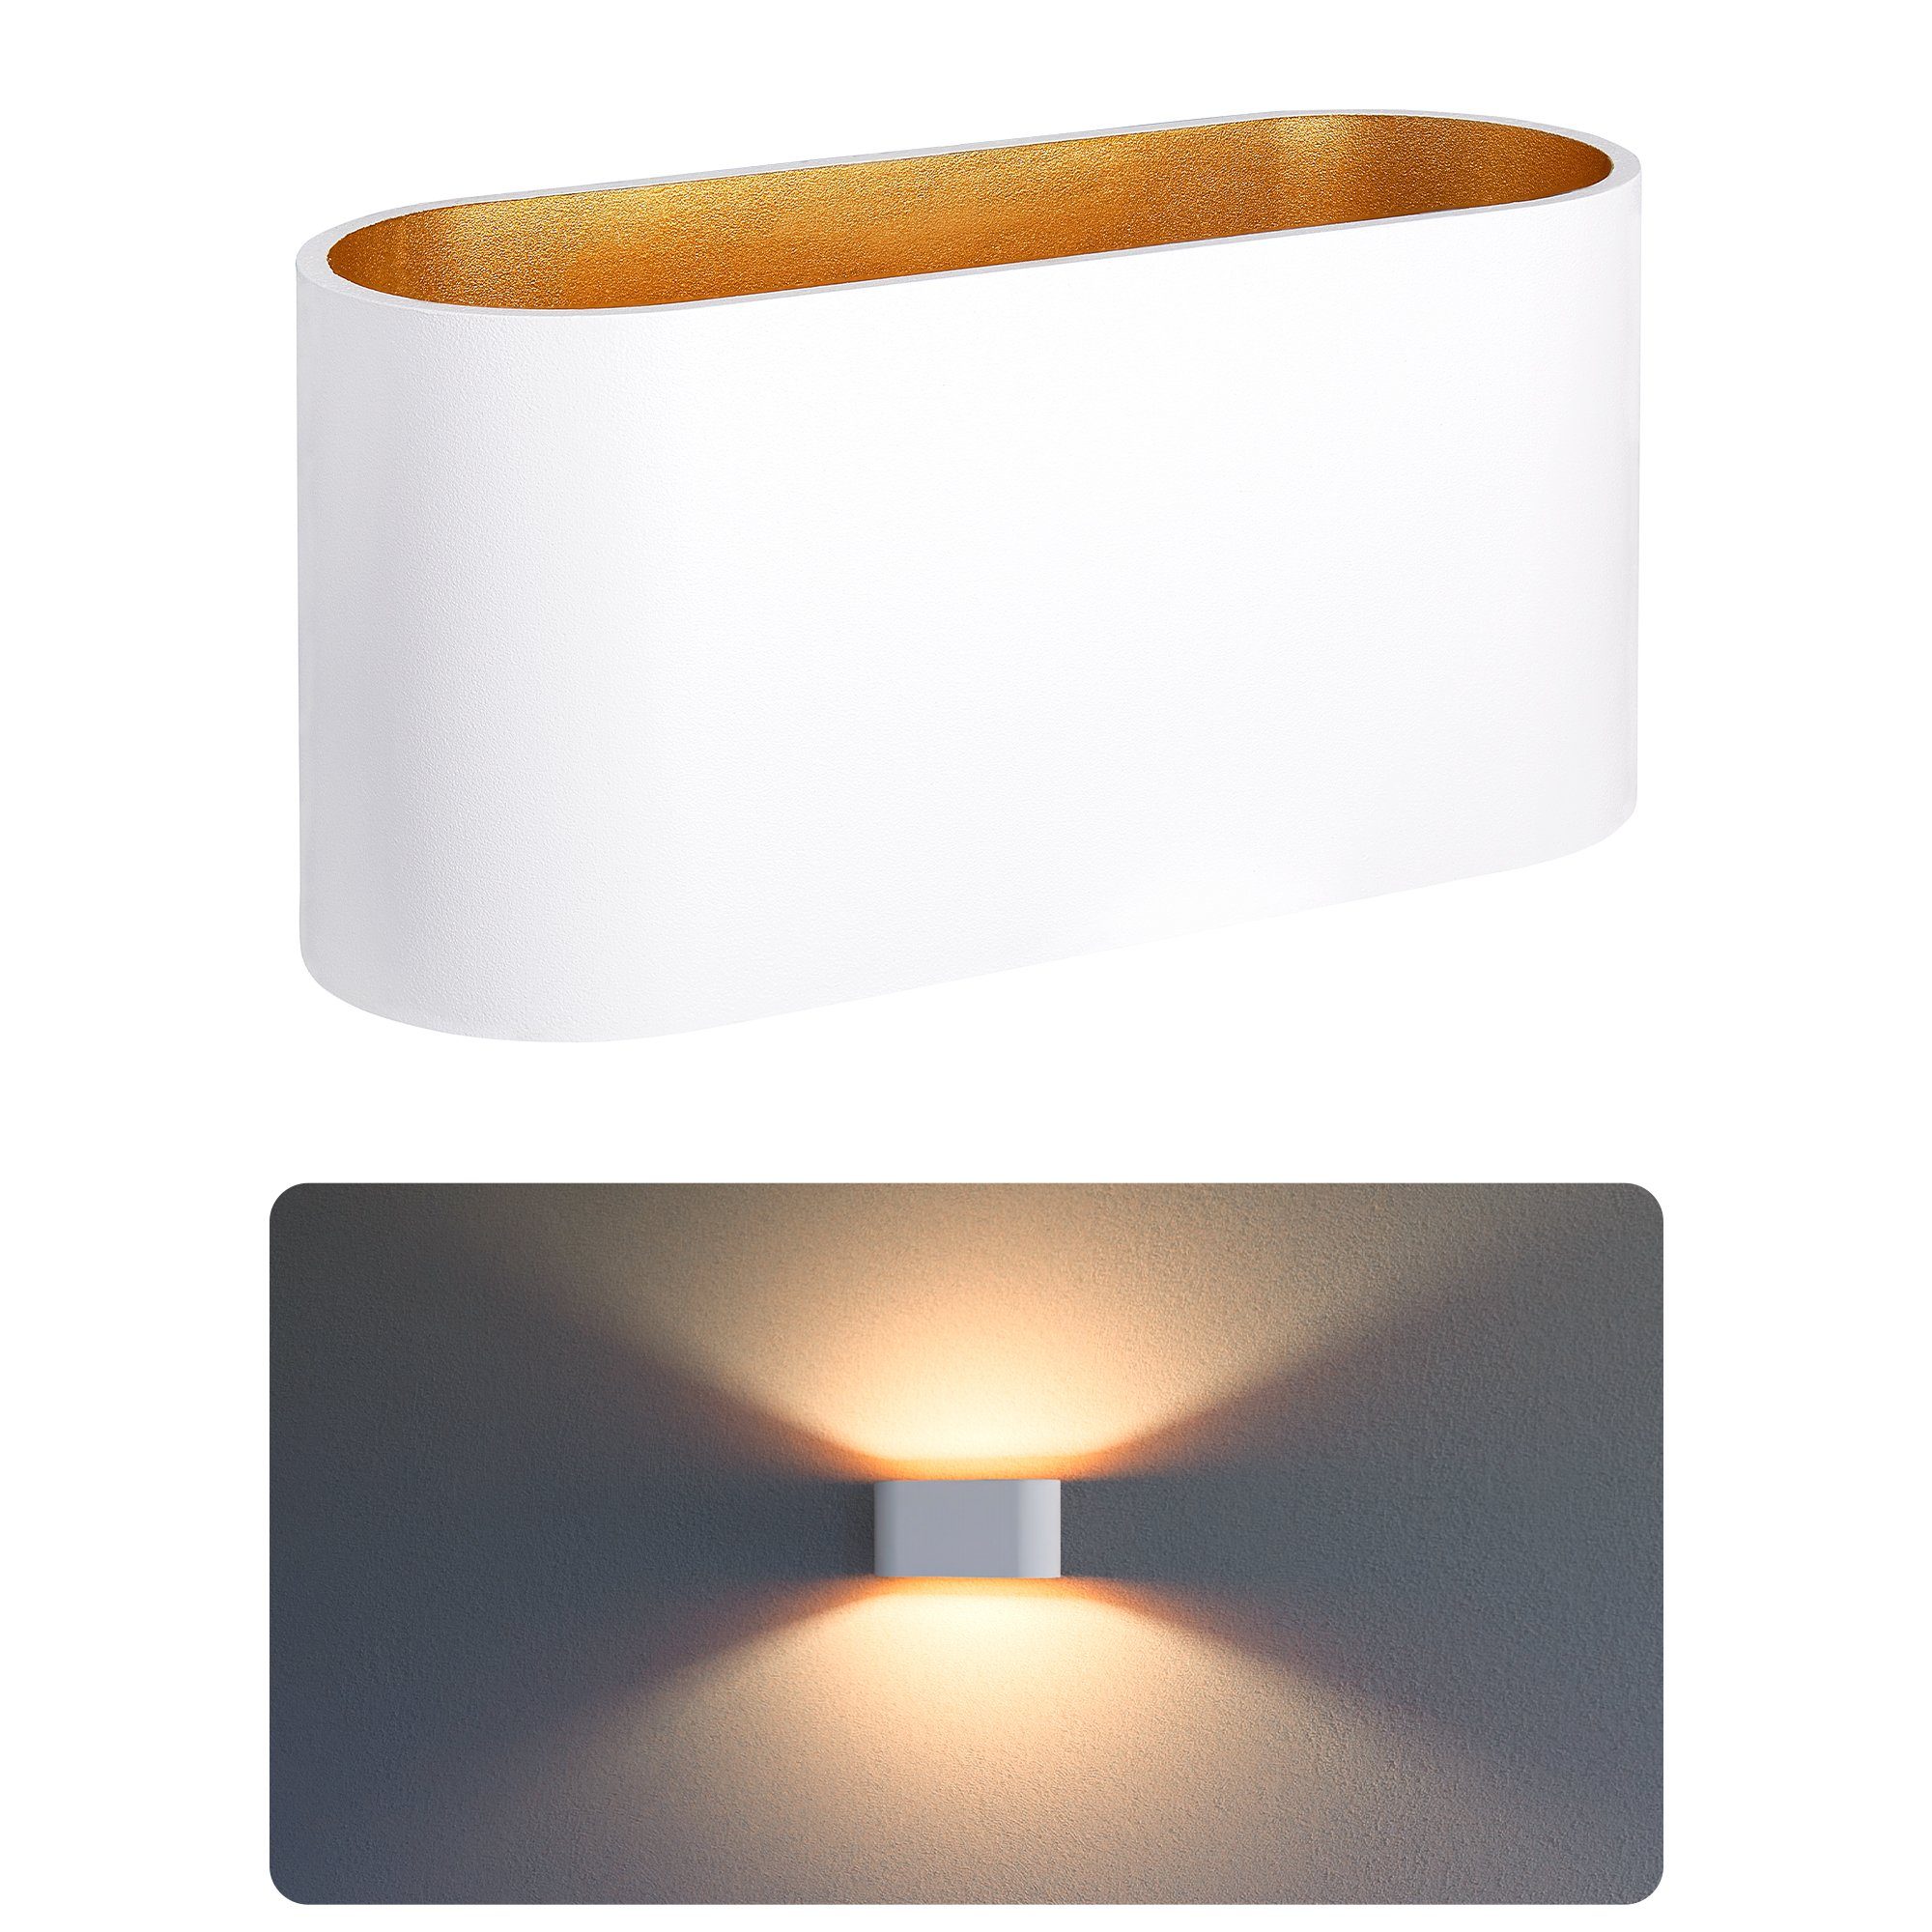 SSC-LUXon LED Wandleuchte JOBERO Wandlampe weiß gold Up & Down mit G9 LED warmweiß 2W, Warmweiß